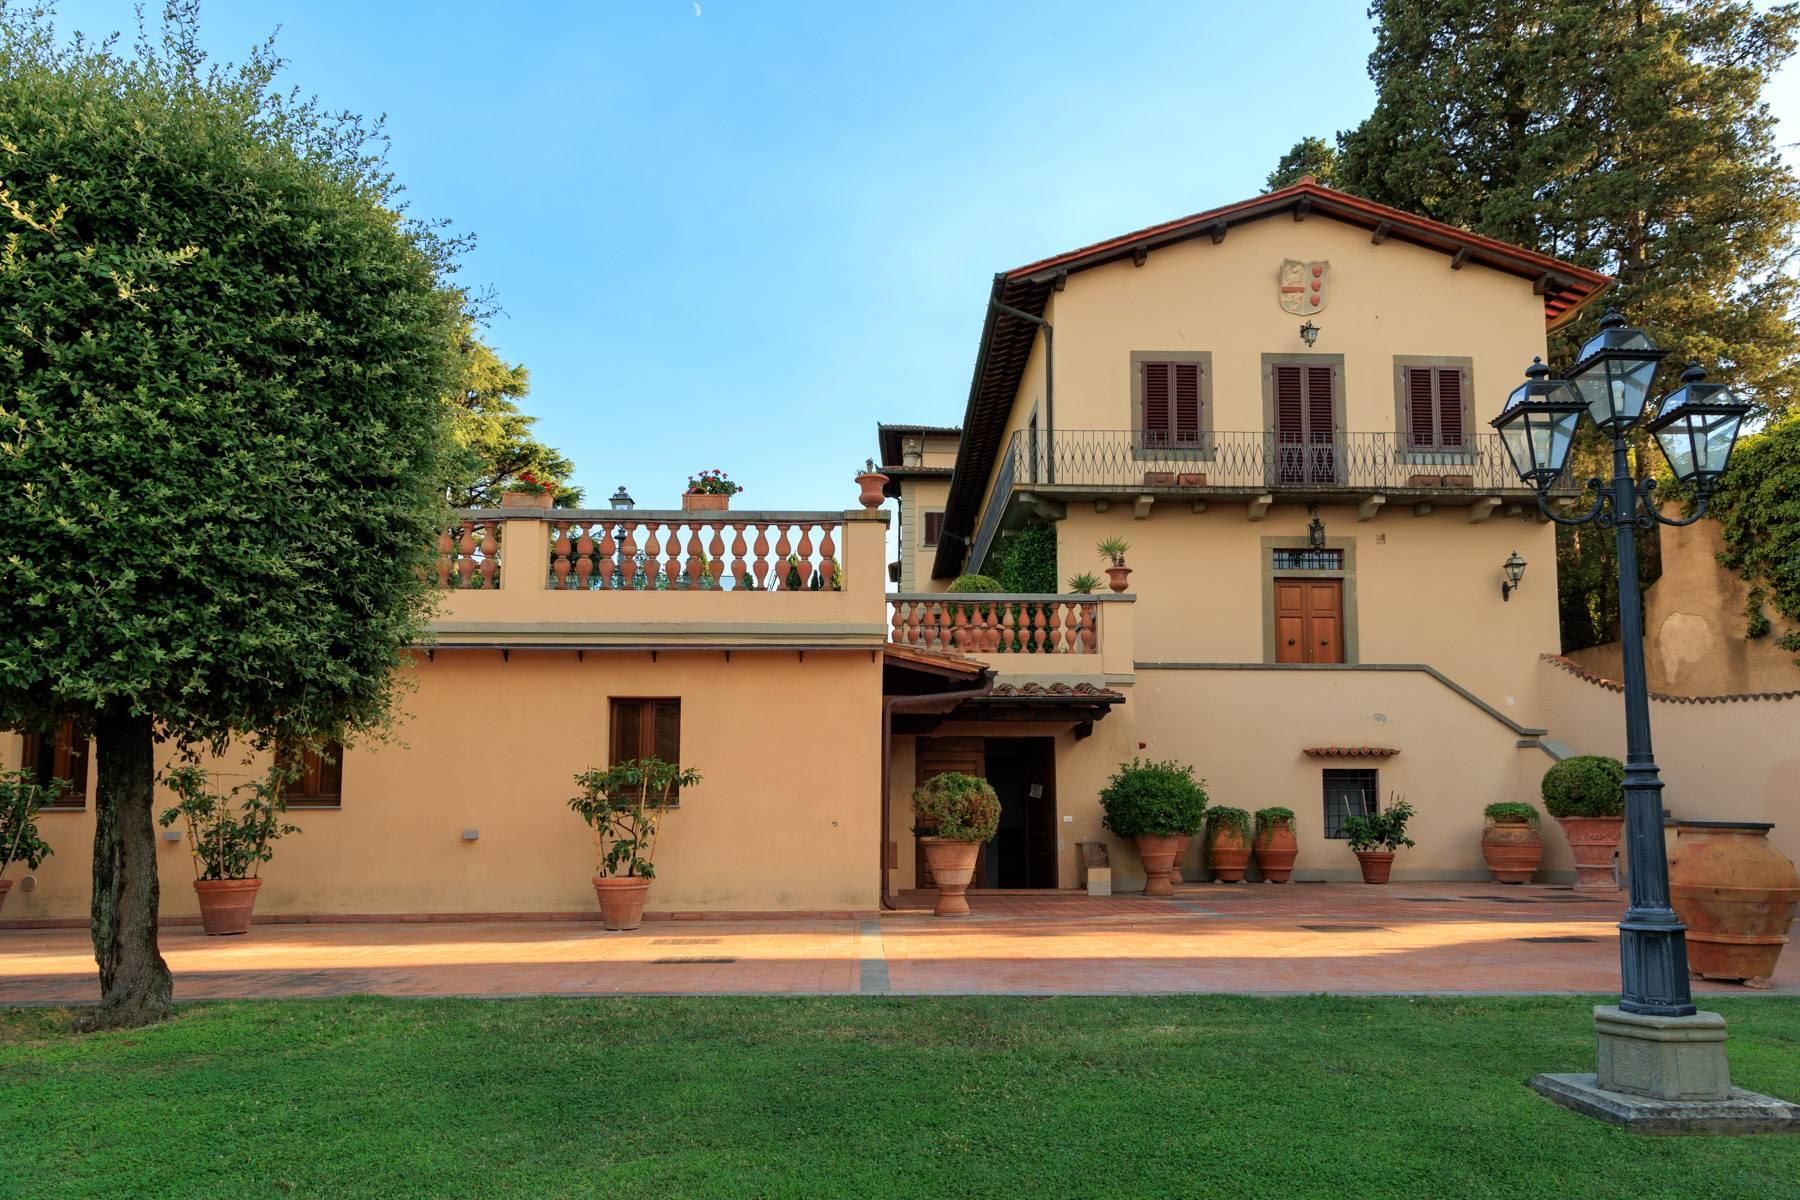 Apartment in a historic villa on the hills of Carmignano - 20